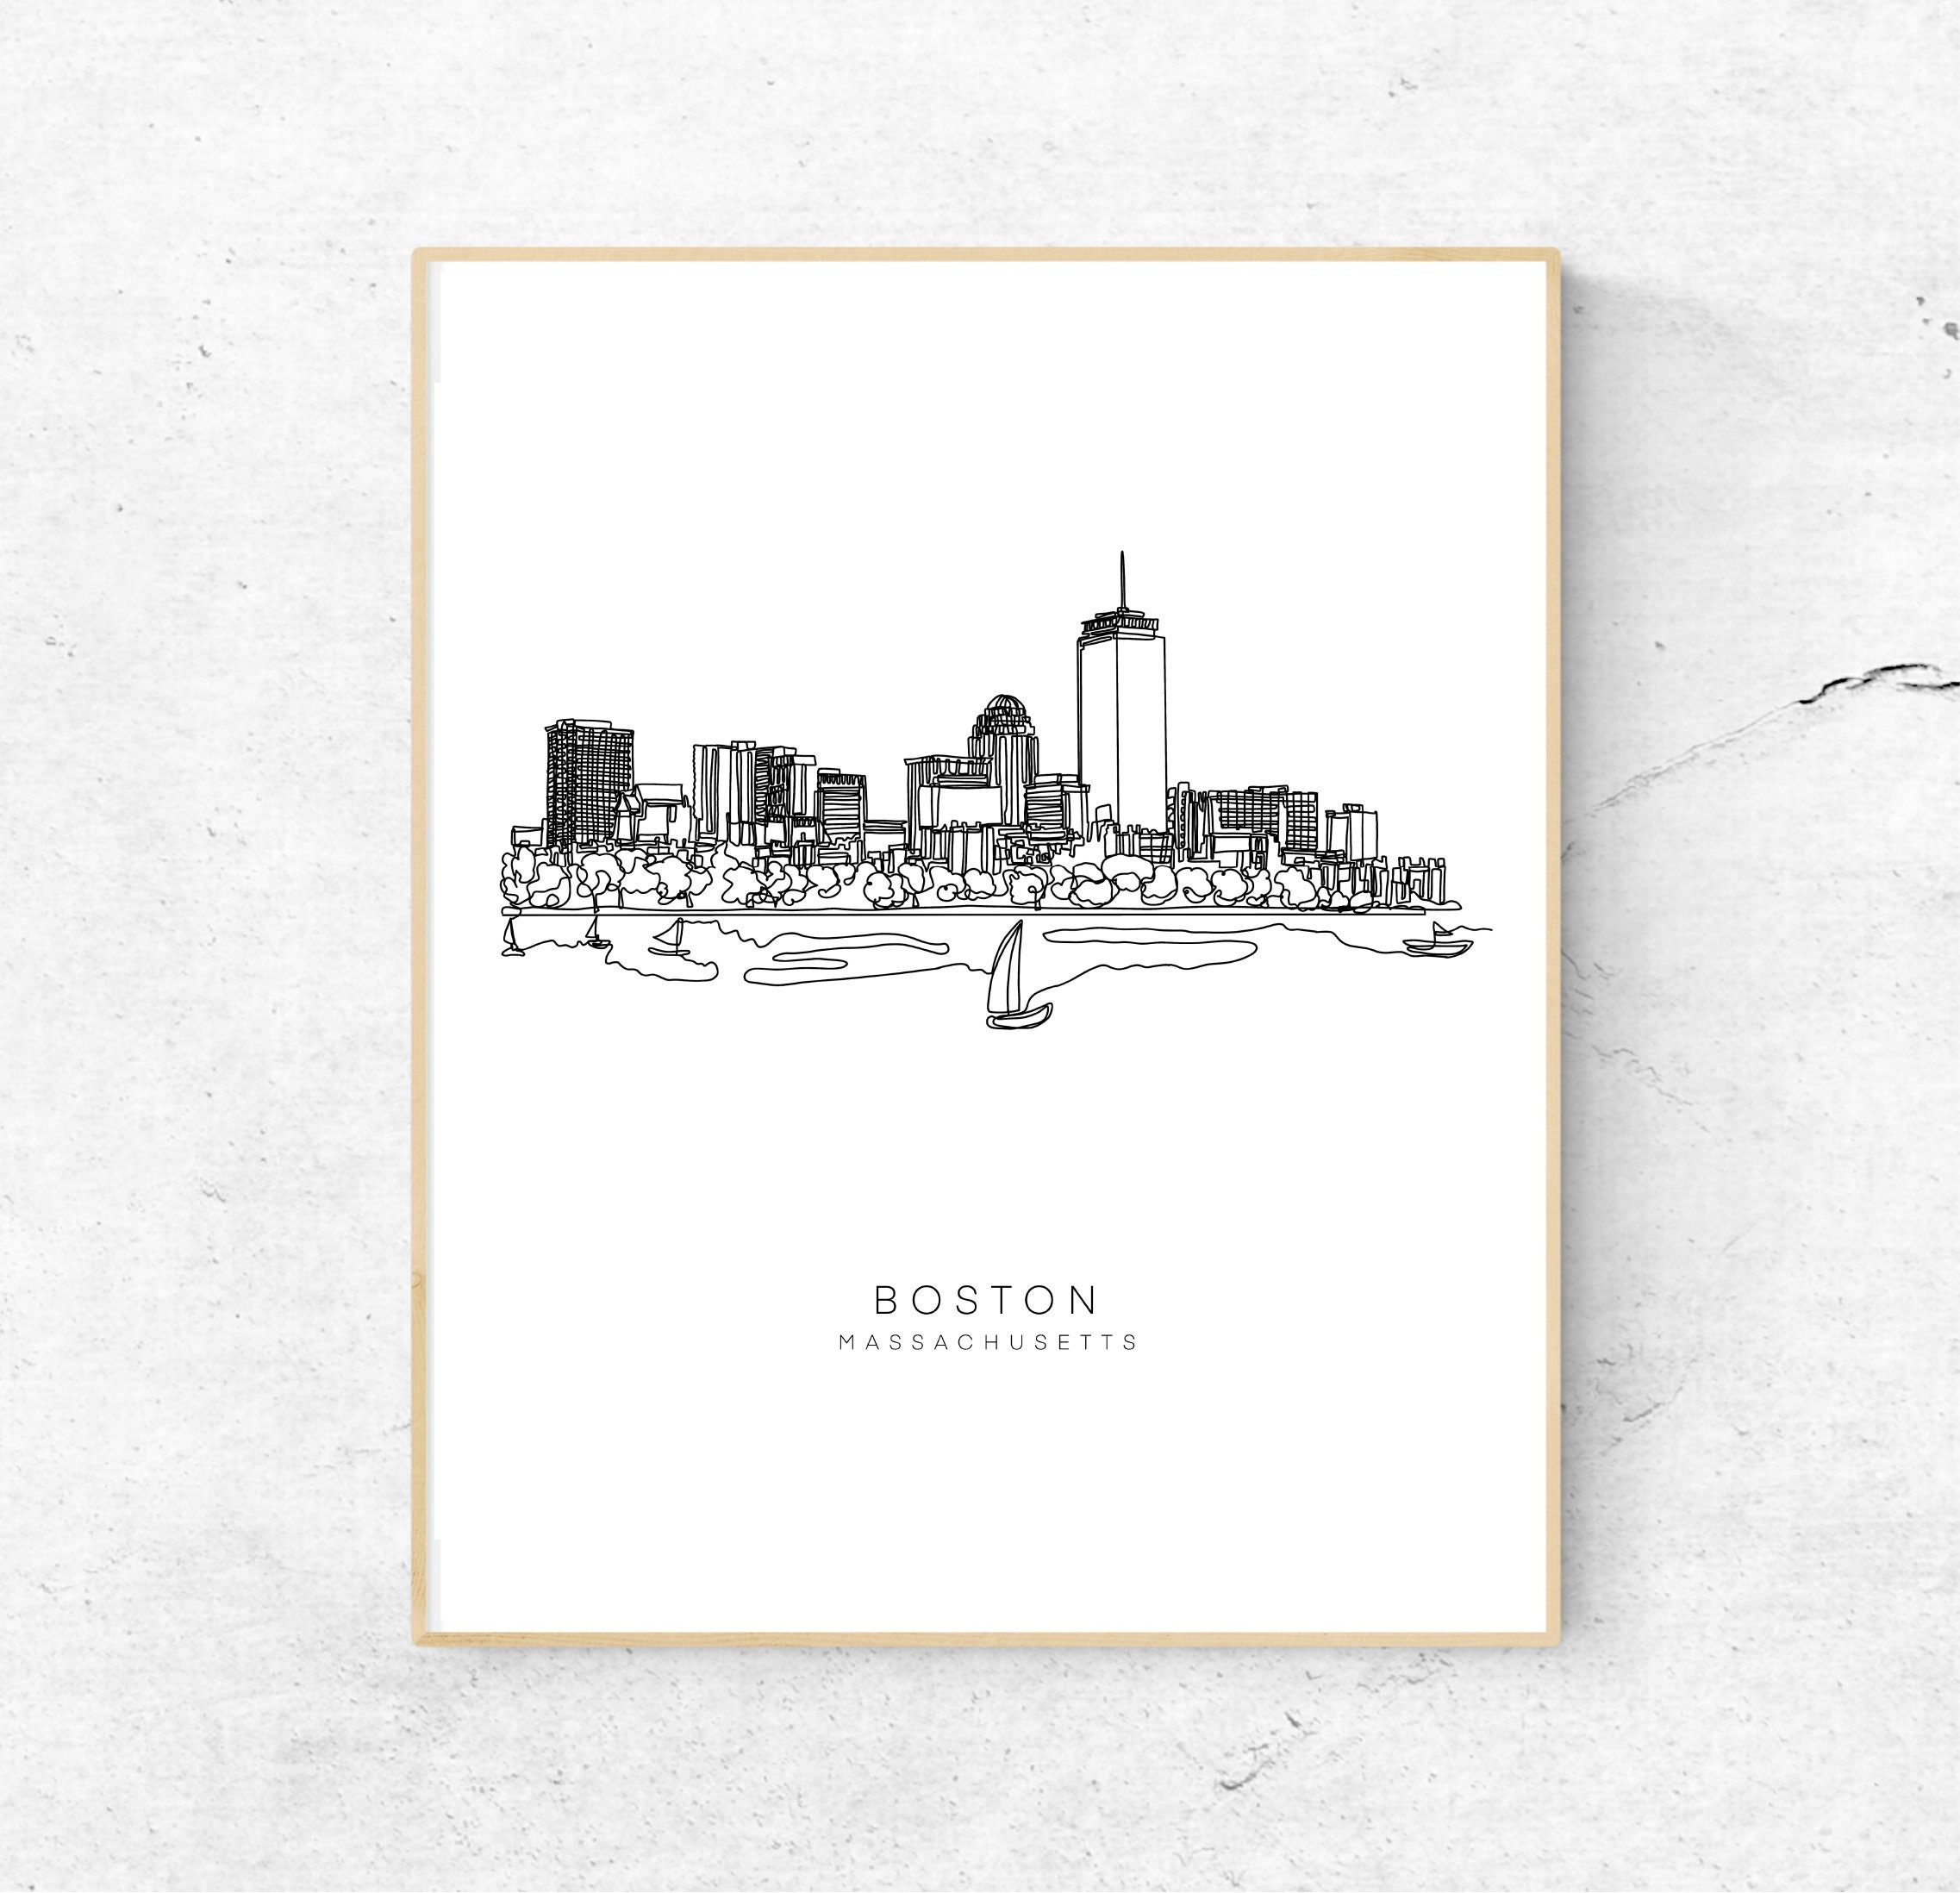 Boston Massachusett City Skyline 8x10 Photo Print Beautiful Wall Decor A589 